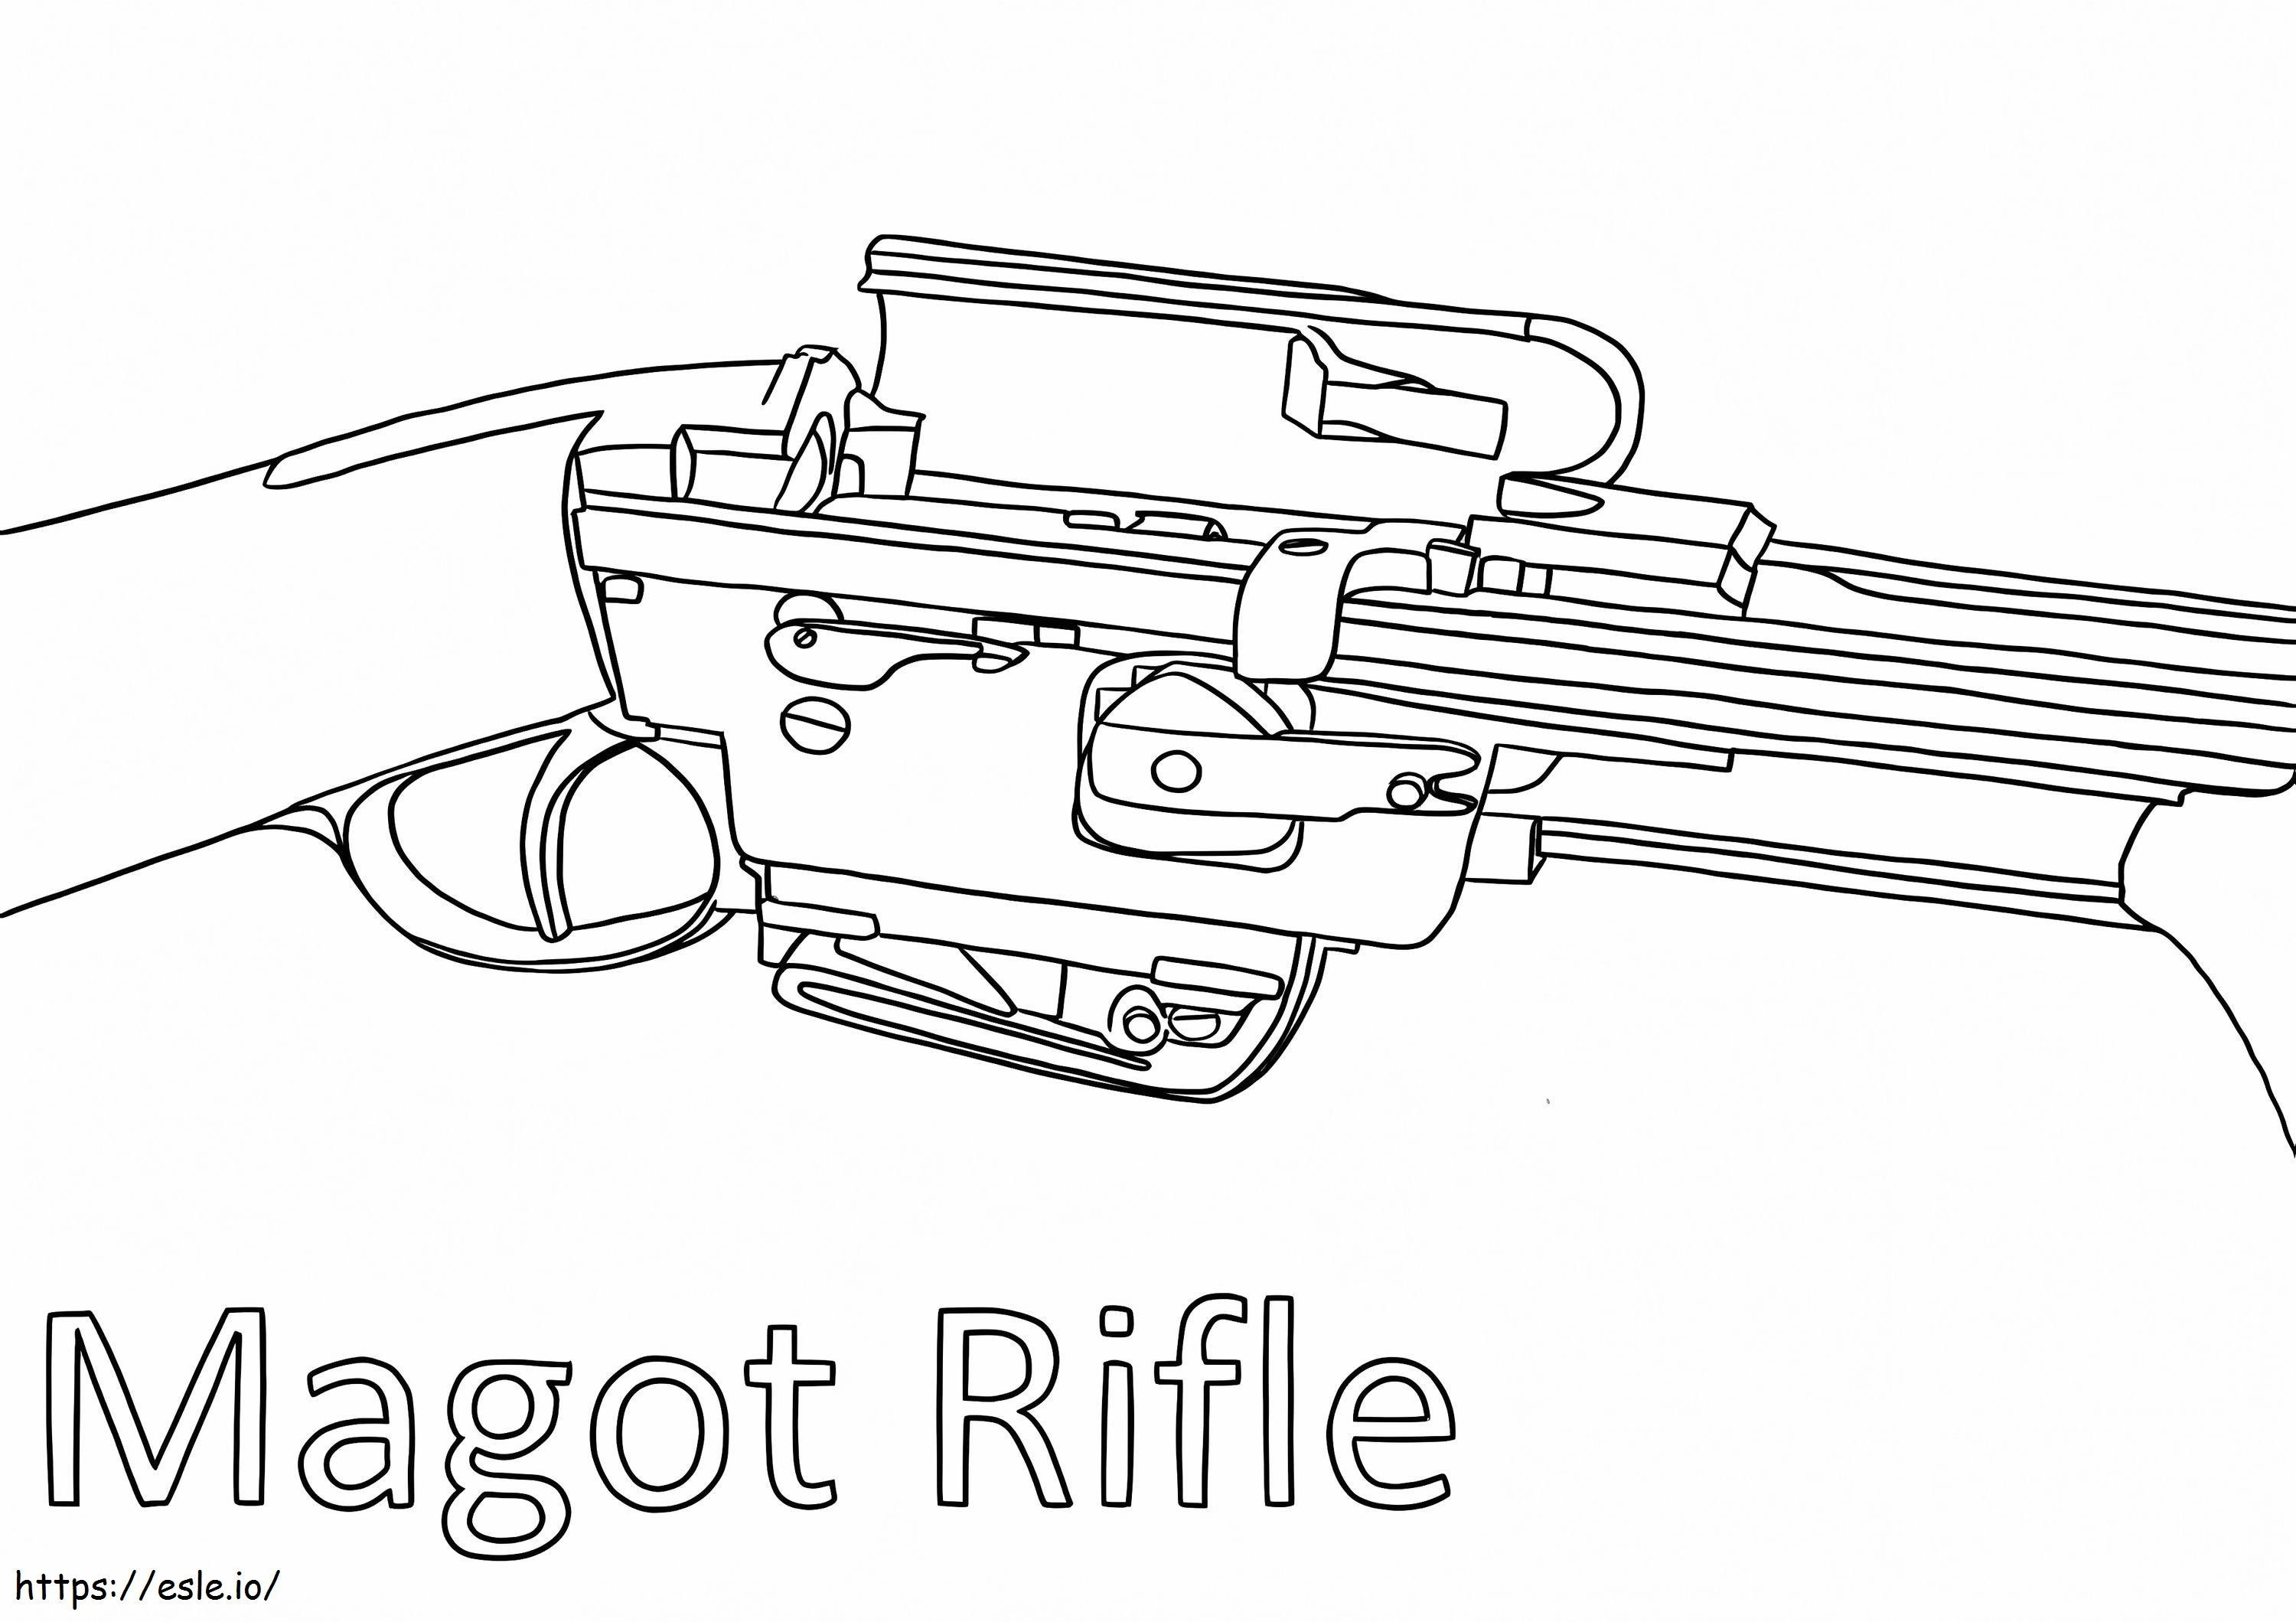 Rifle Magot para colorir